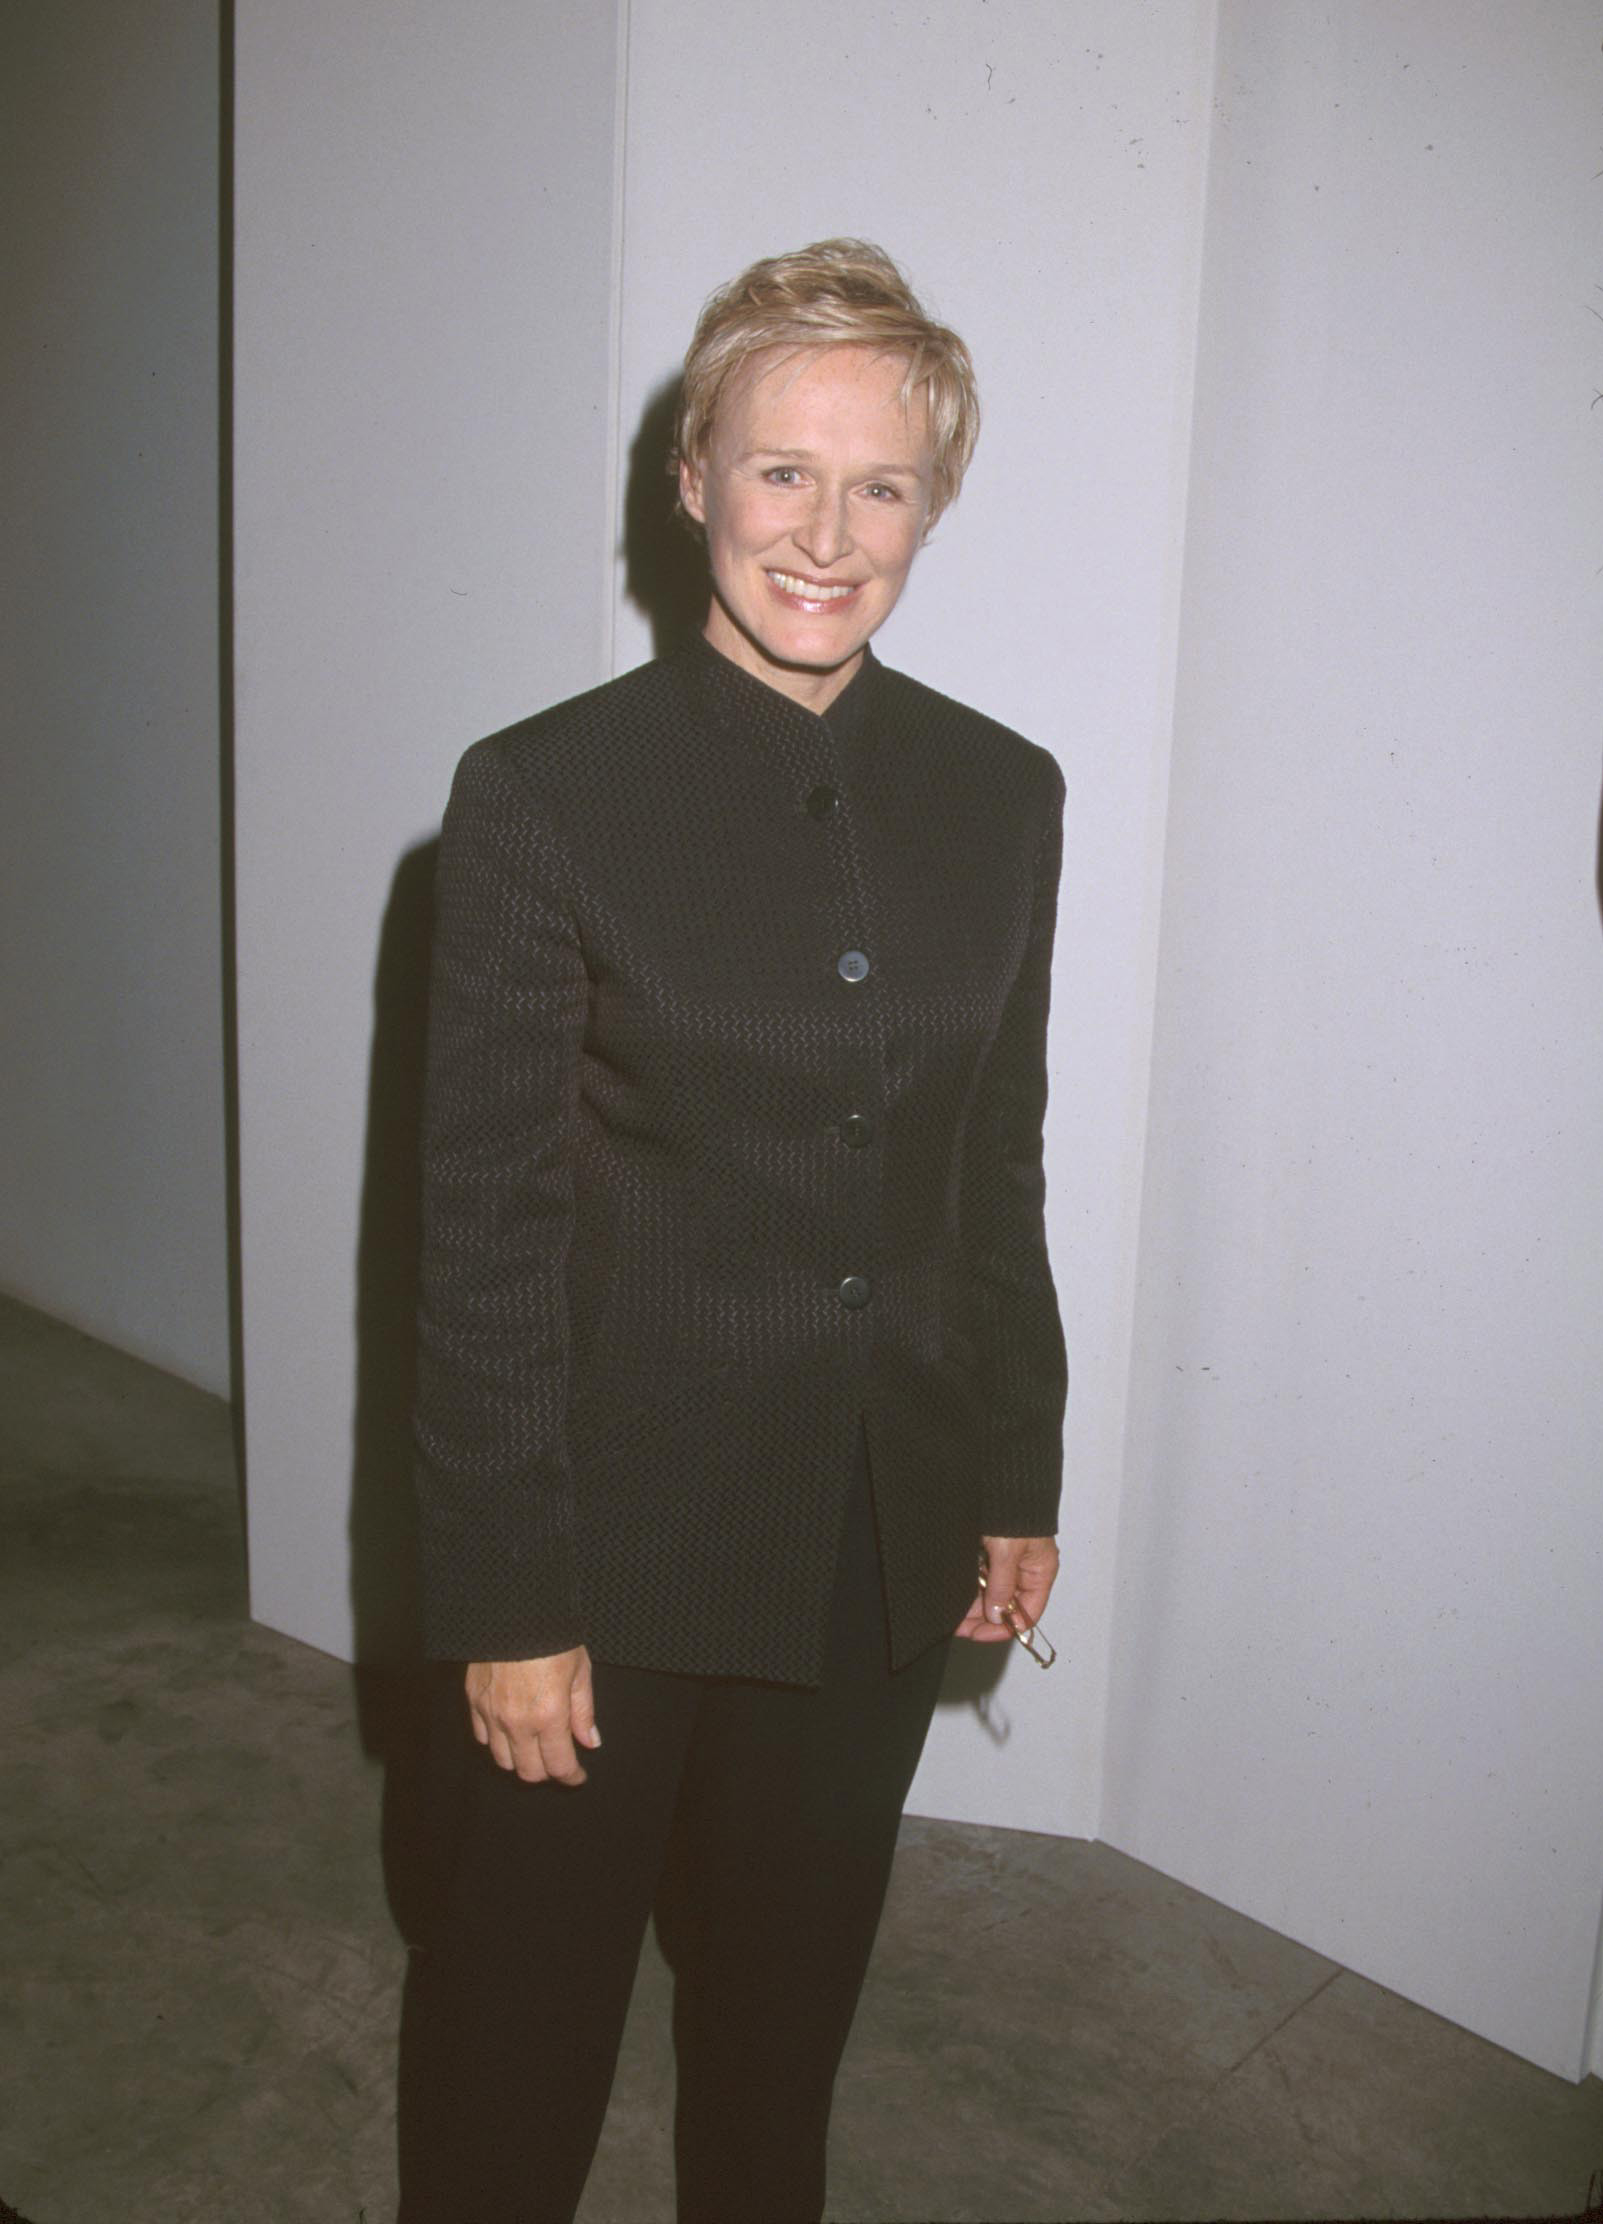 Ellen DeGeneres smiling, wearing a dark patterned suit jacket